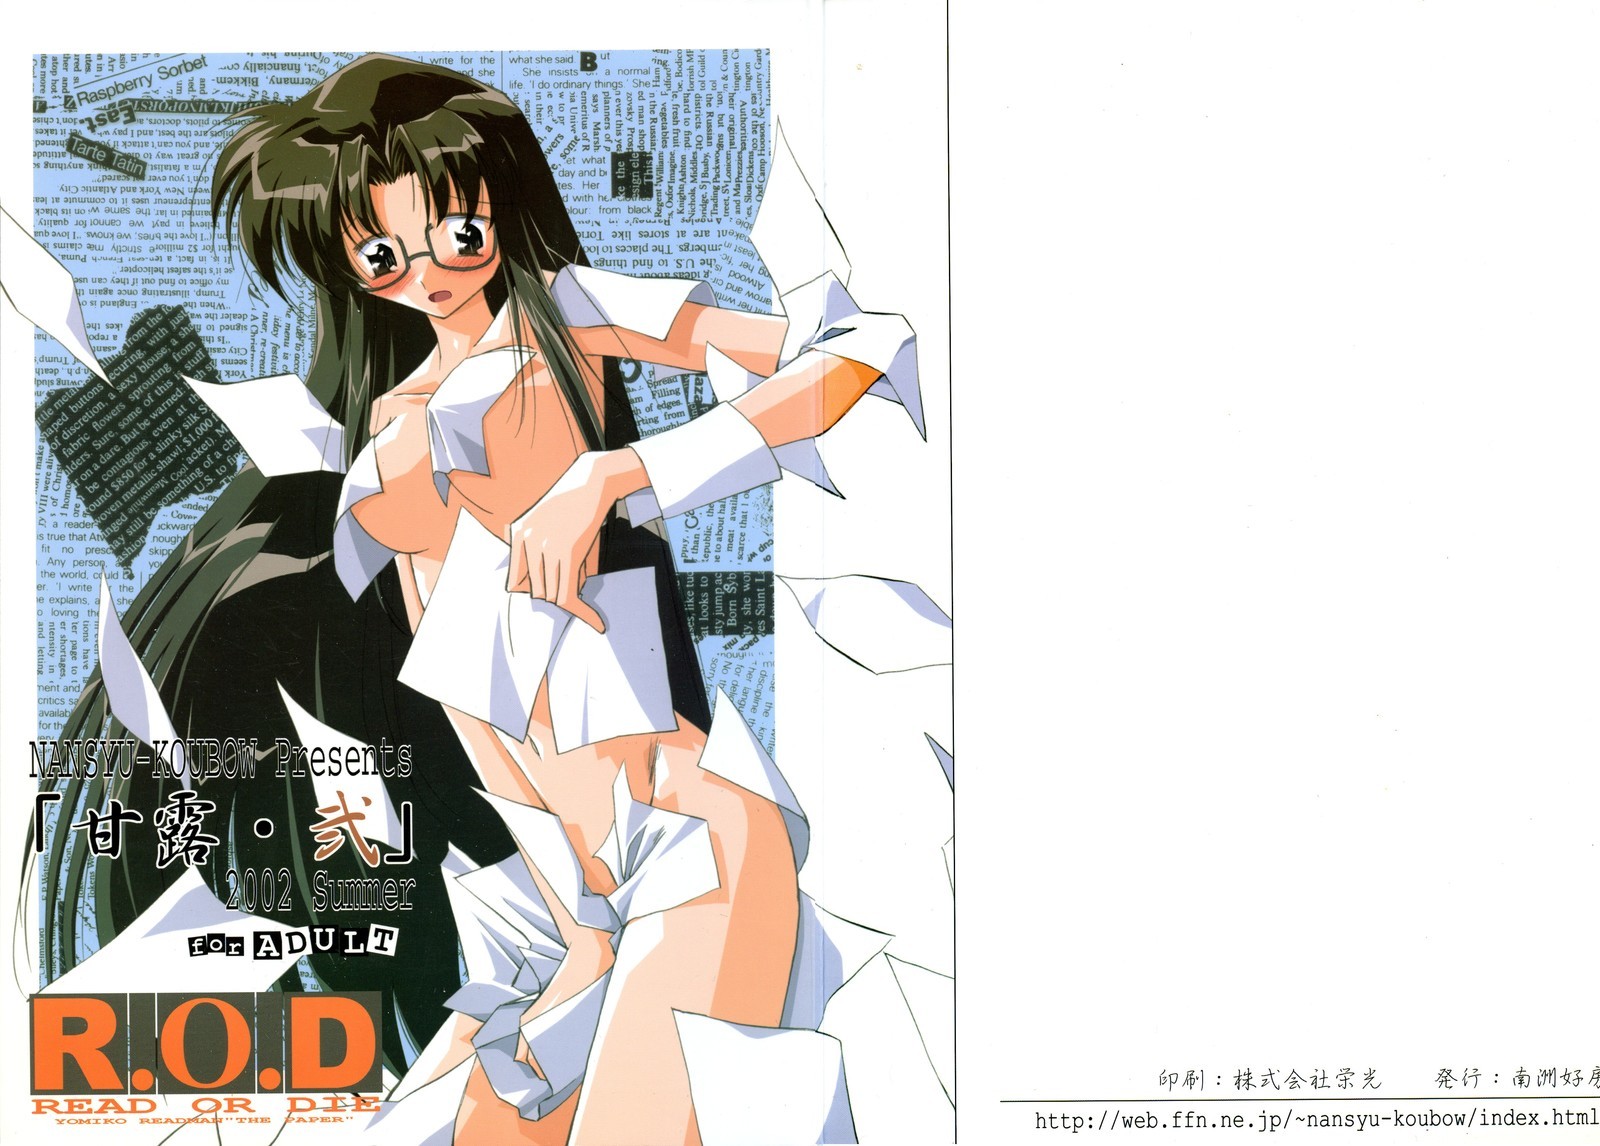 Read Or Die Hentai - read or die - Hentai Manga, Doujins, XXX & Anime Porn